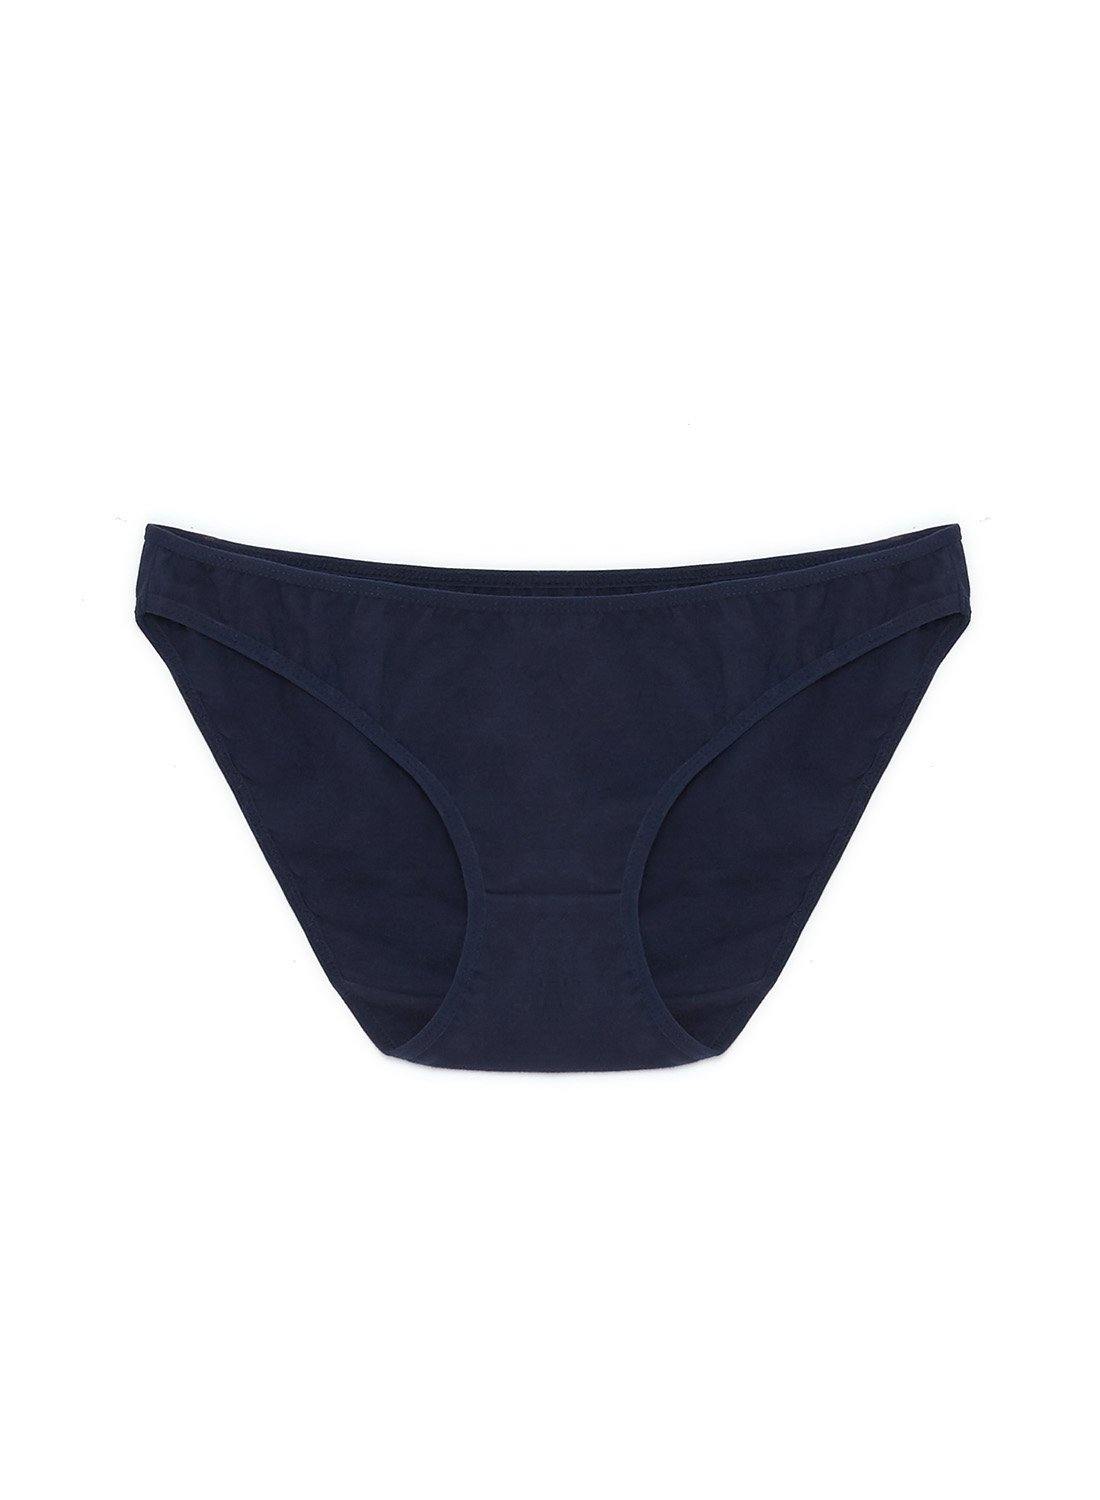 Eve Chantelle Multi Color Underwear - Bikini Cut - Pack Of 5 Panties For Women - chantelleve